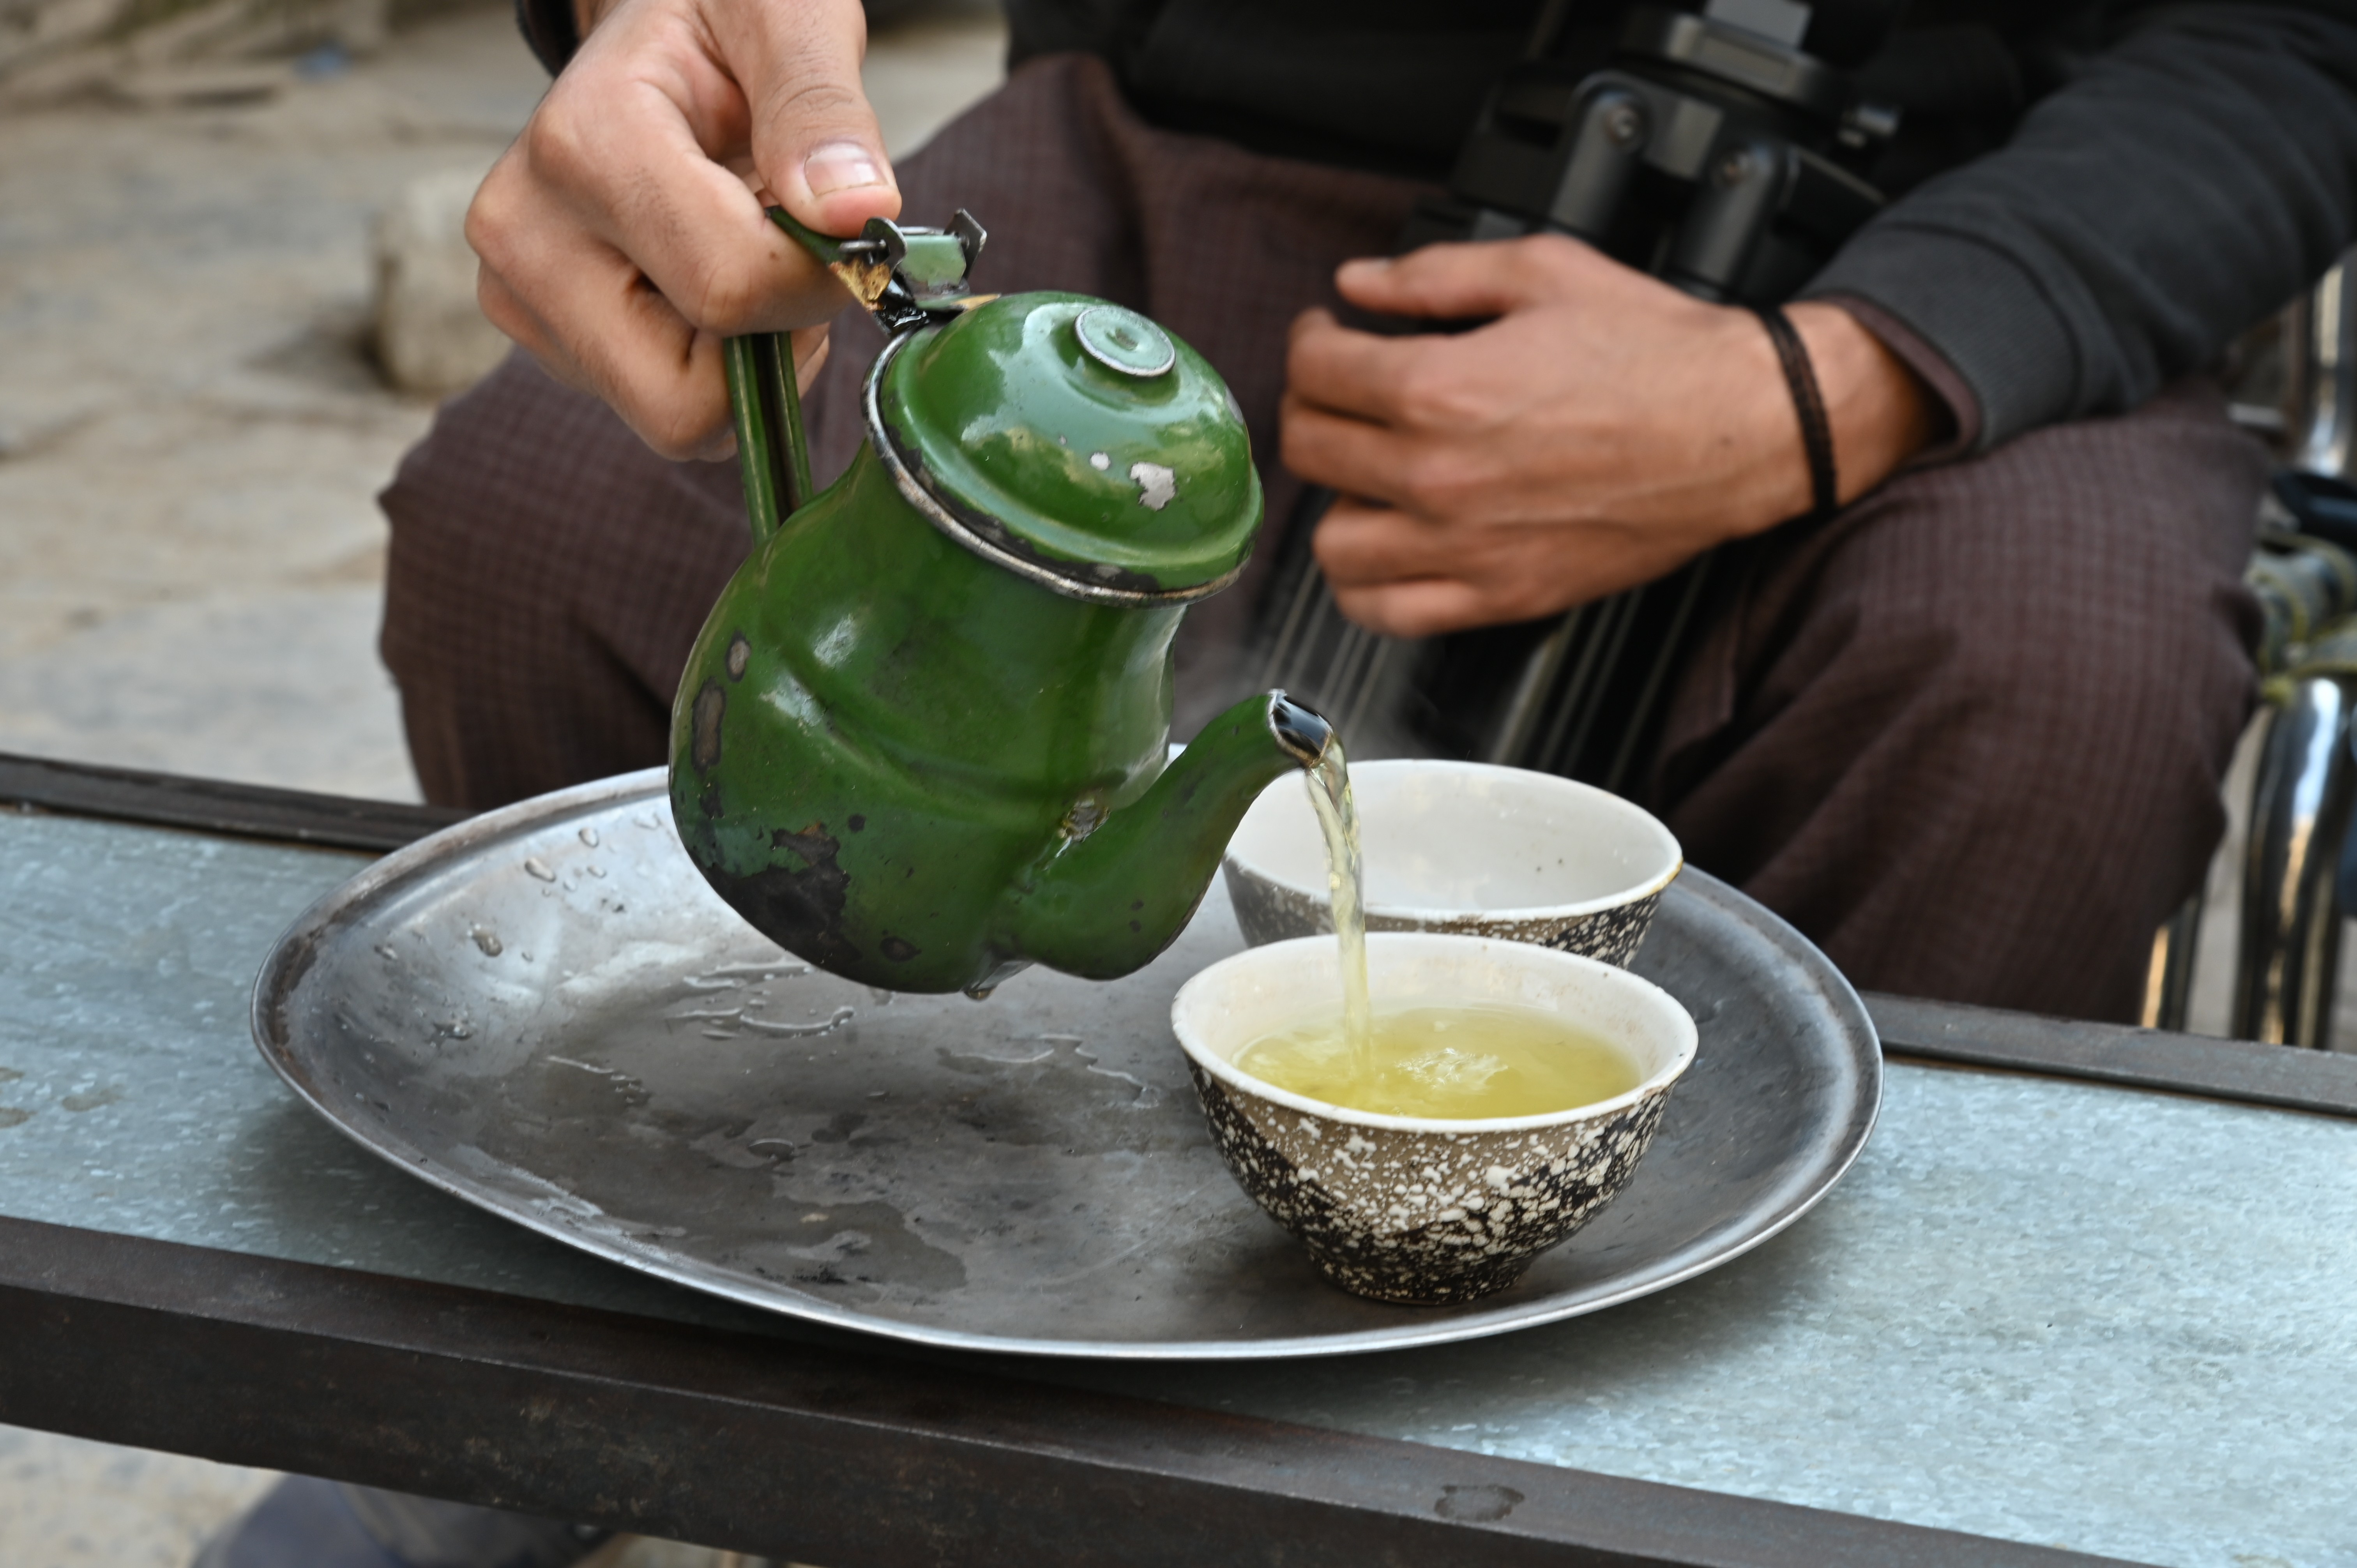 A man having a cup of green tea